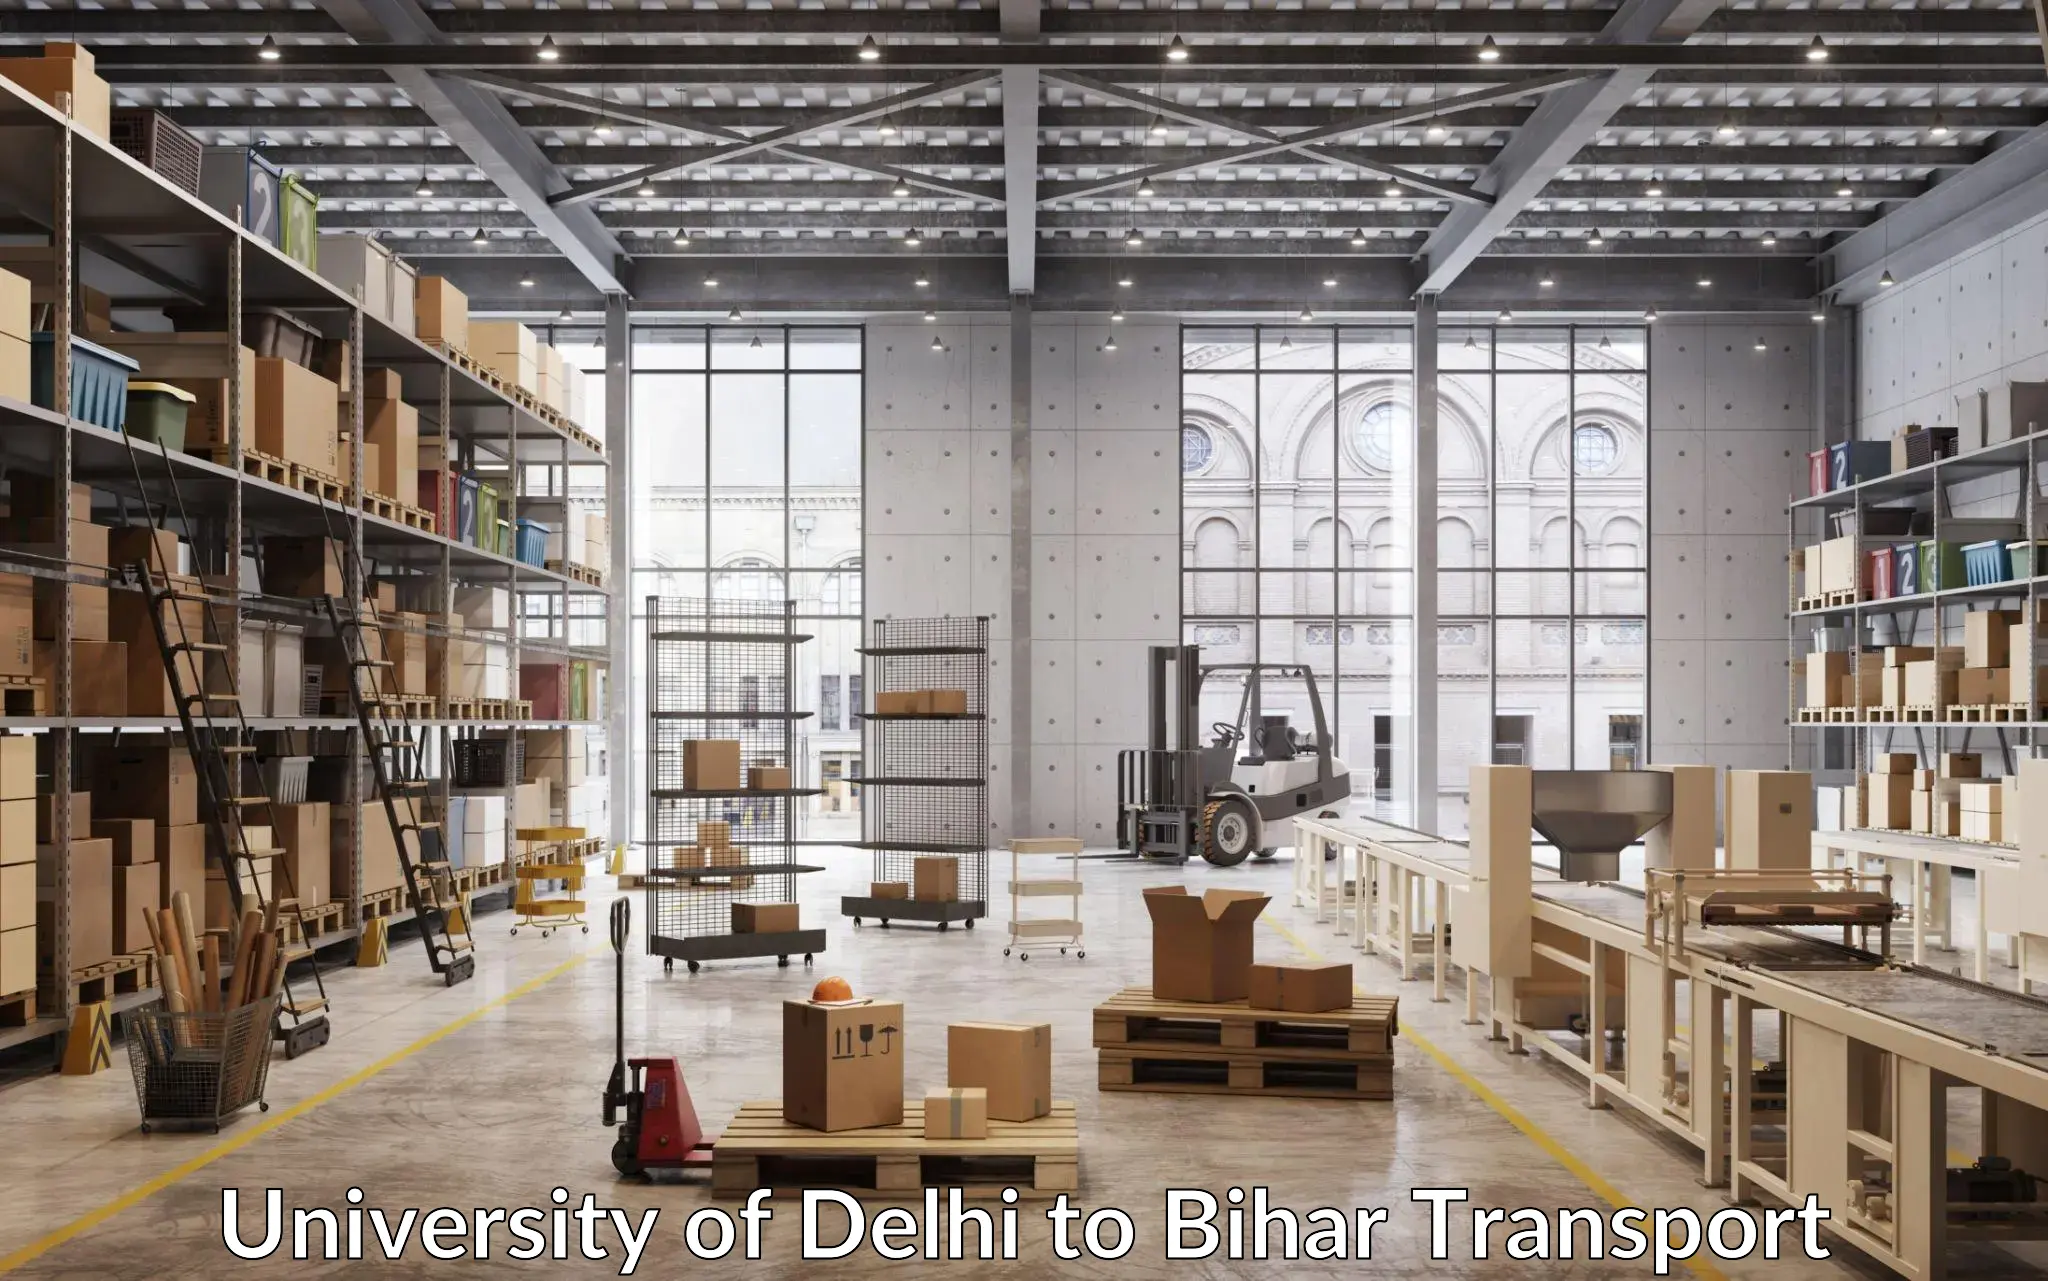 Transport in sharing in University of Delhi to Dhaka